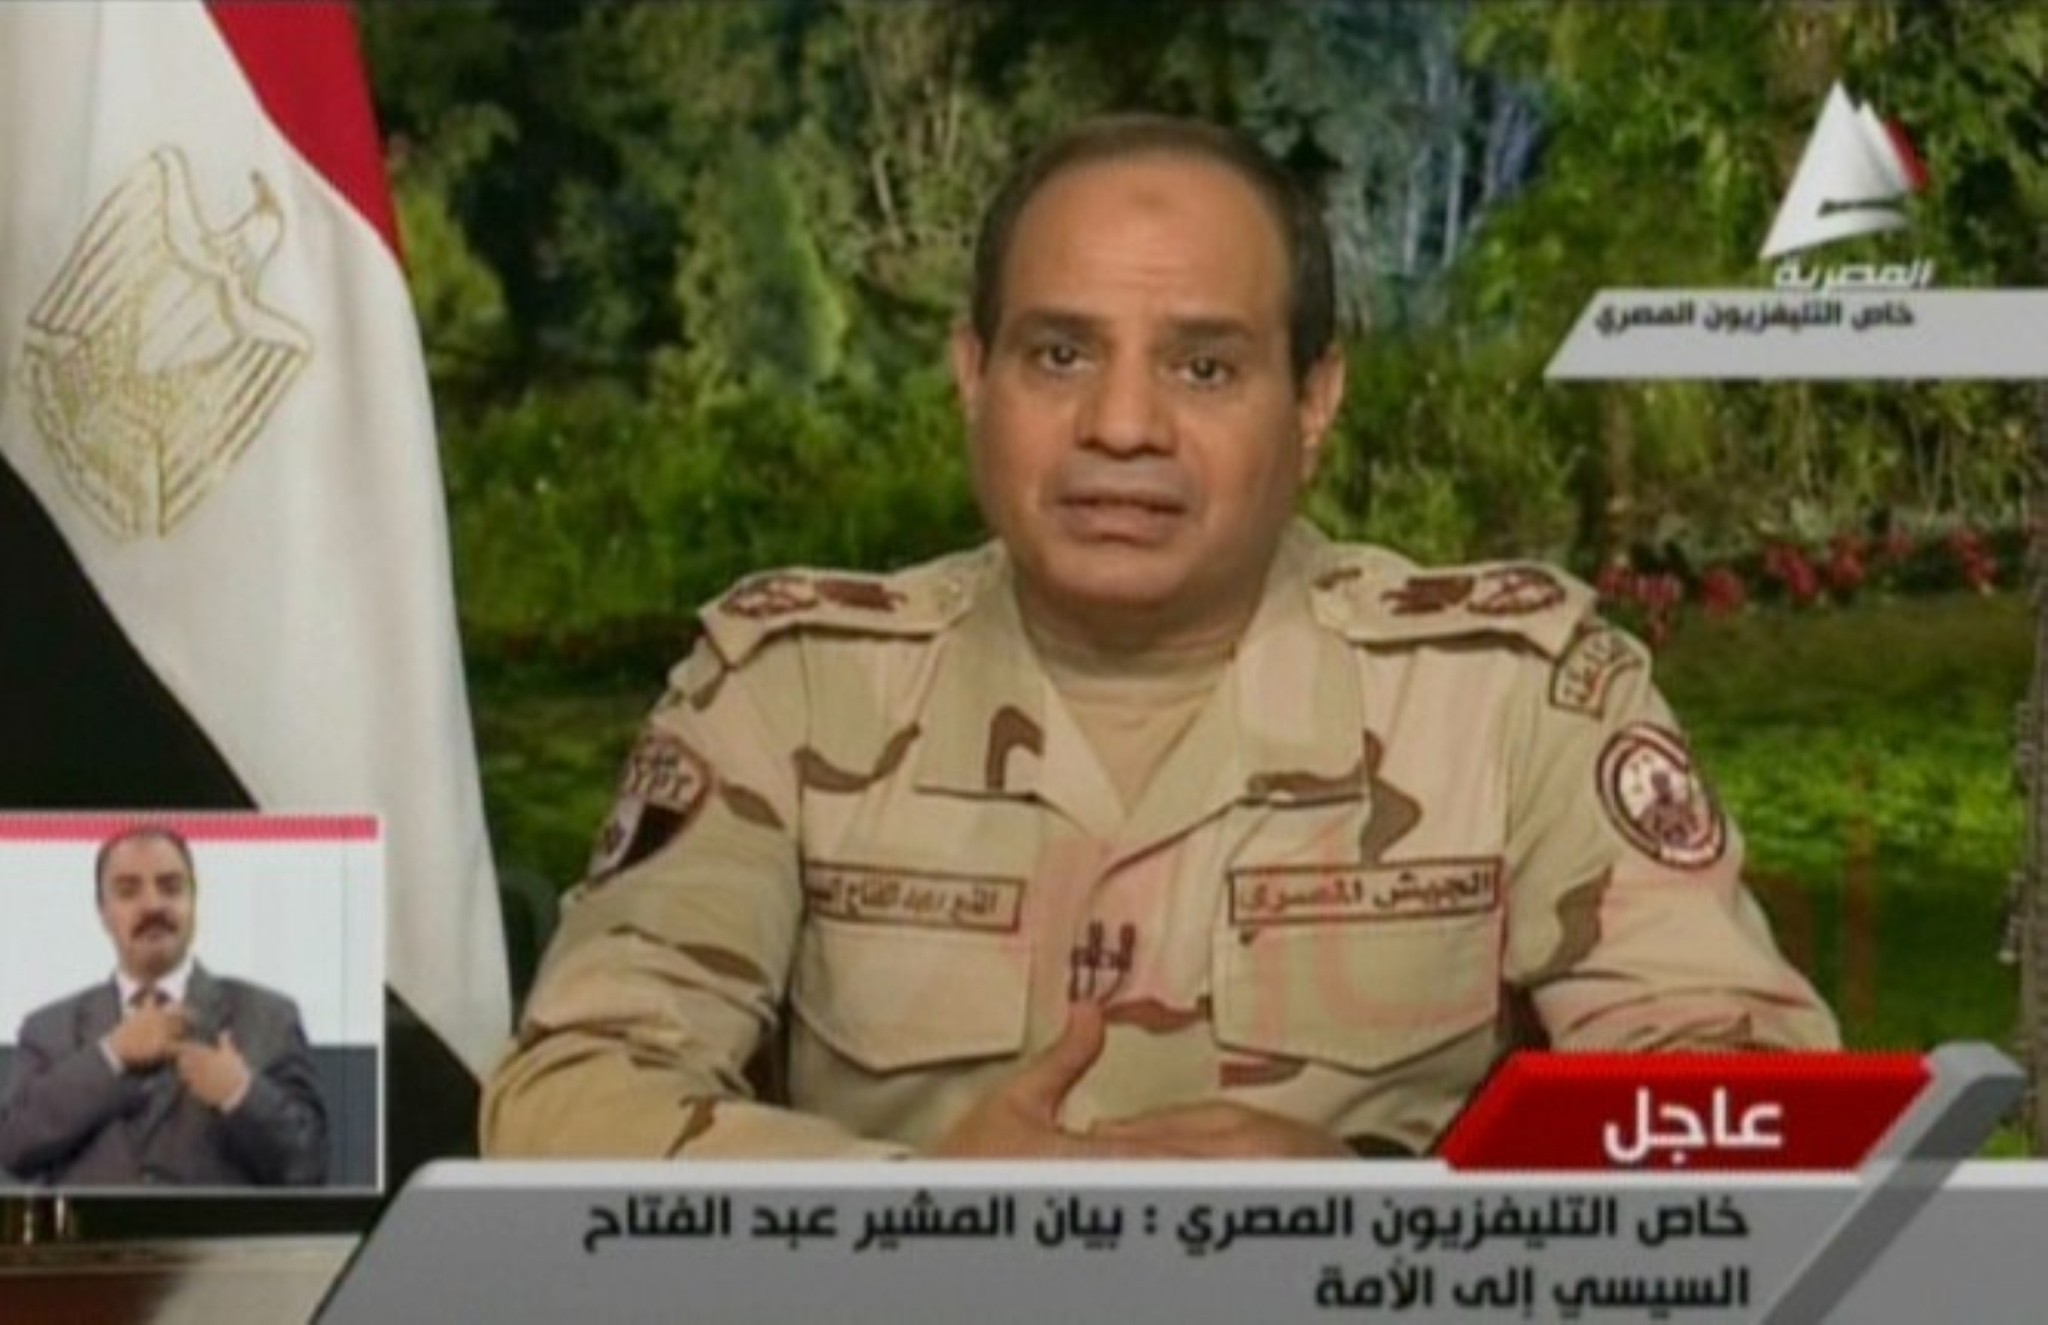 Screen grab of Sisi's televised speech